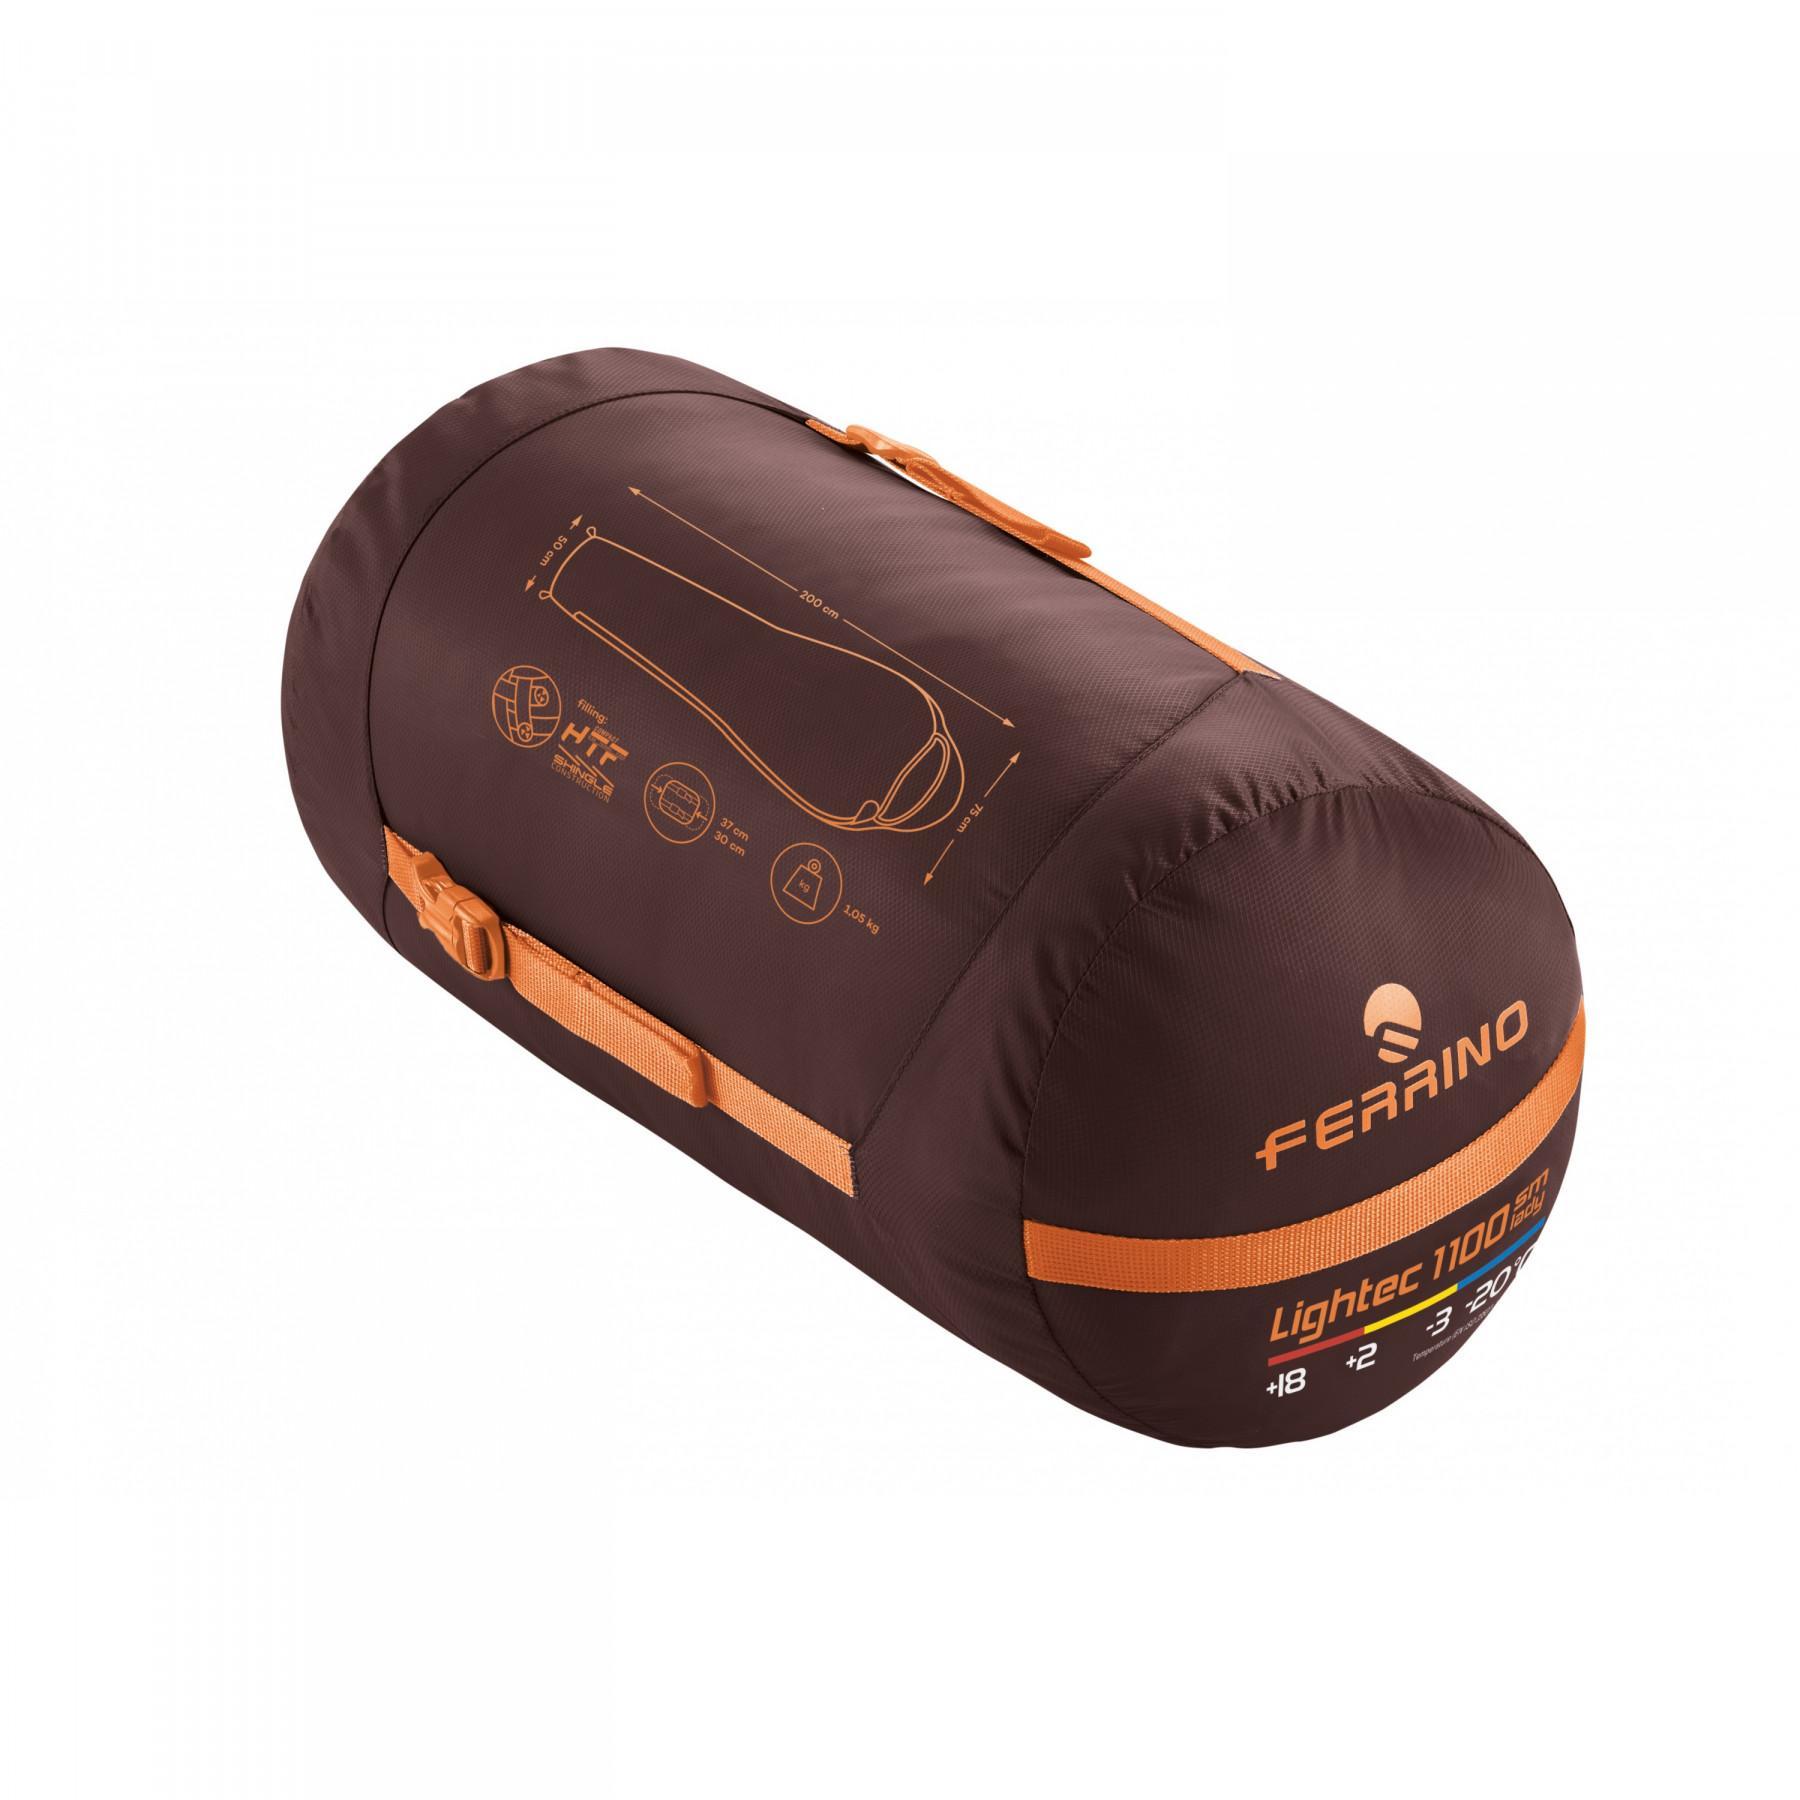 Sleeping bag for women Ferrino lightech sm 1100